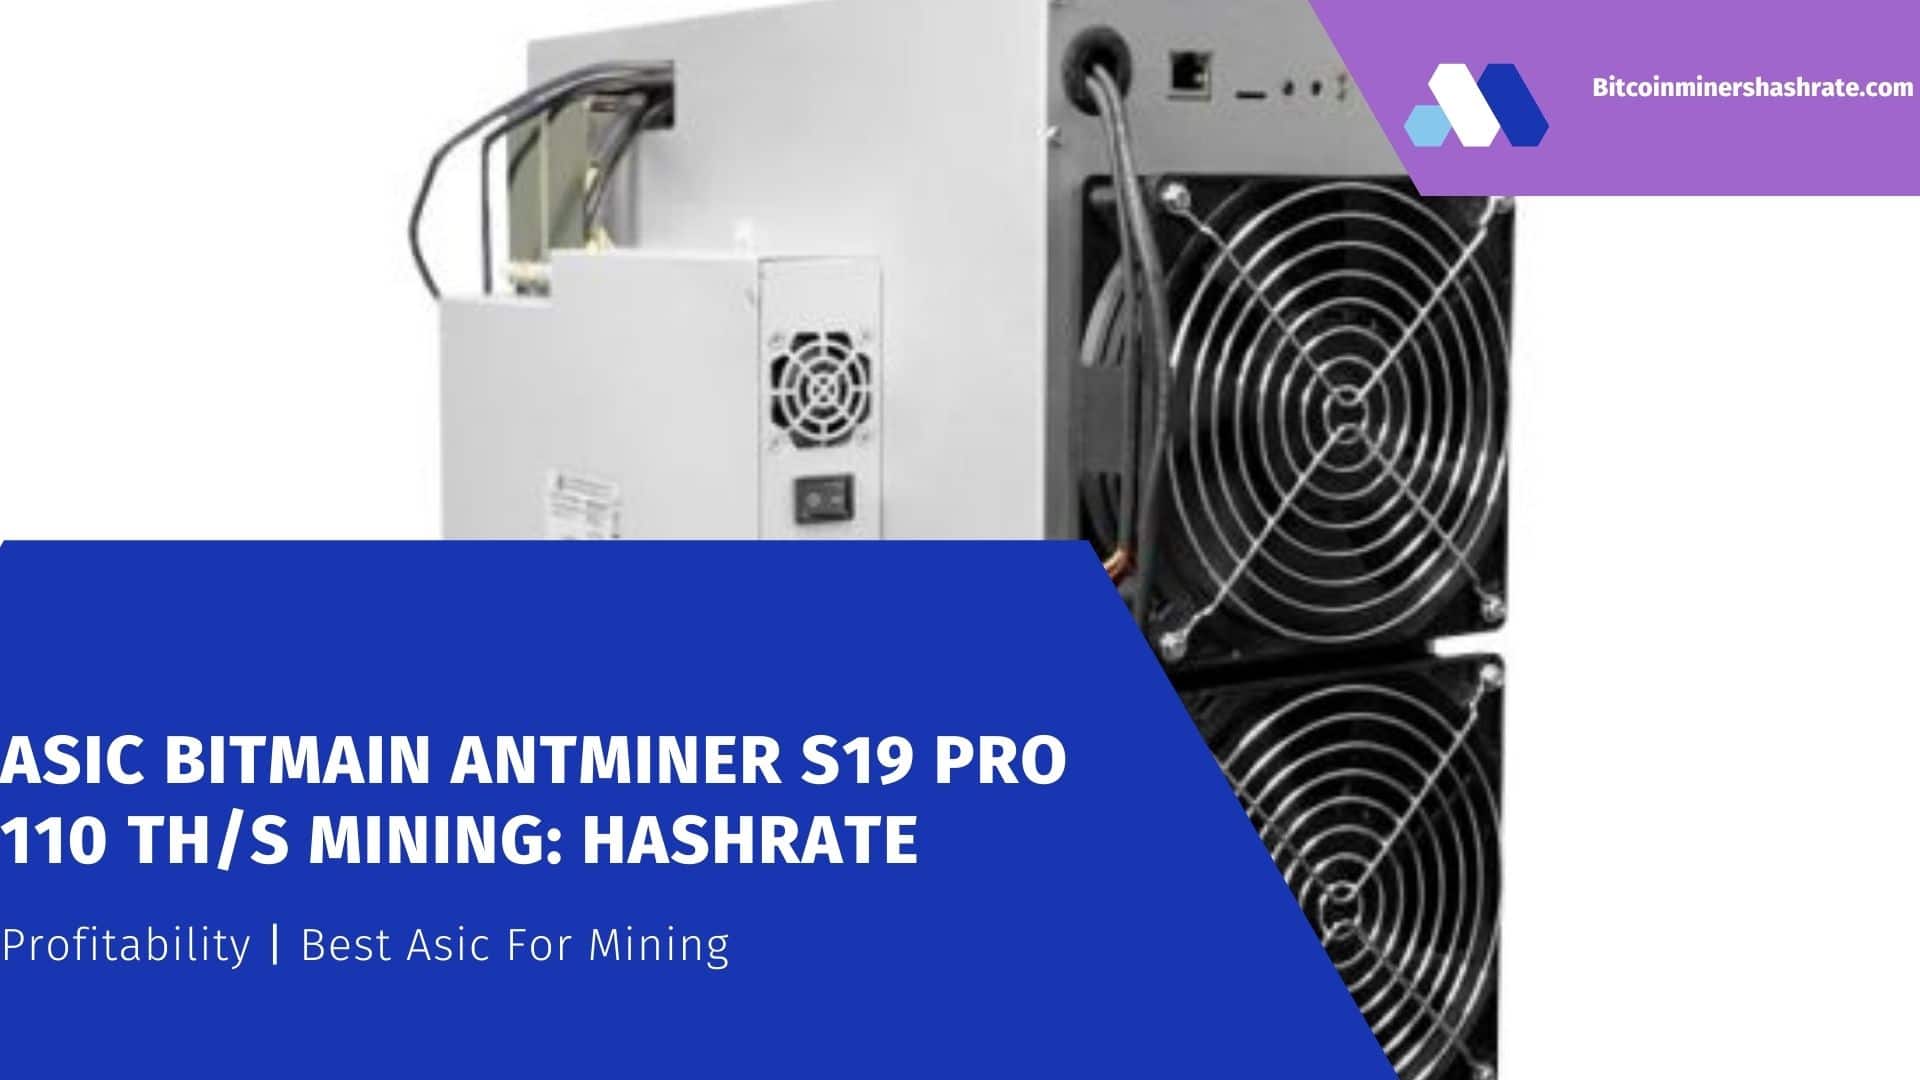 ASIC Bitmain Antminer S19 Pro 110 THs Mining Hashrate